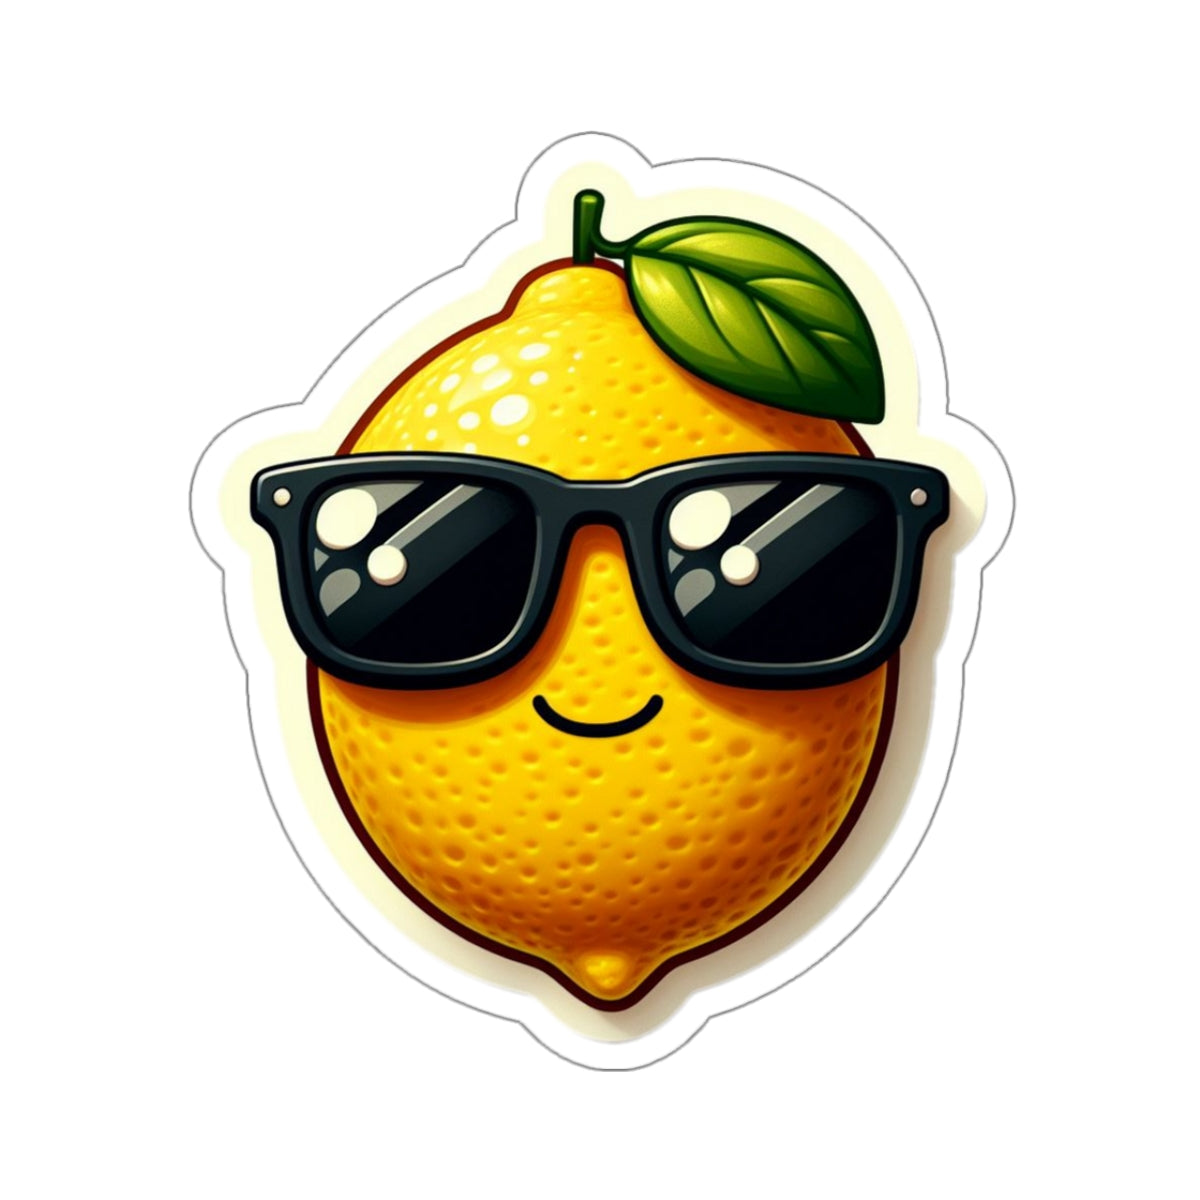 Cool Lemon Sticker